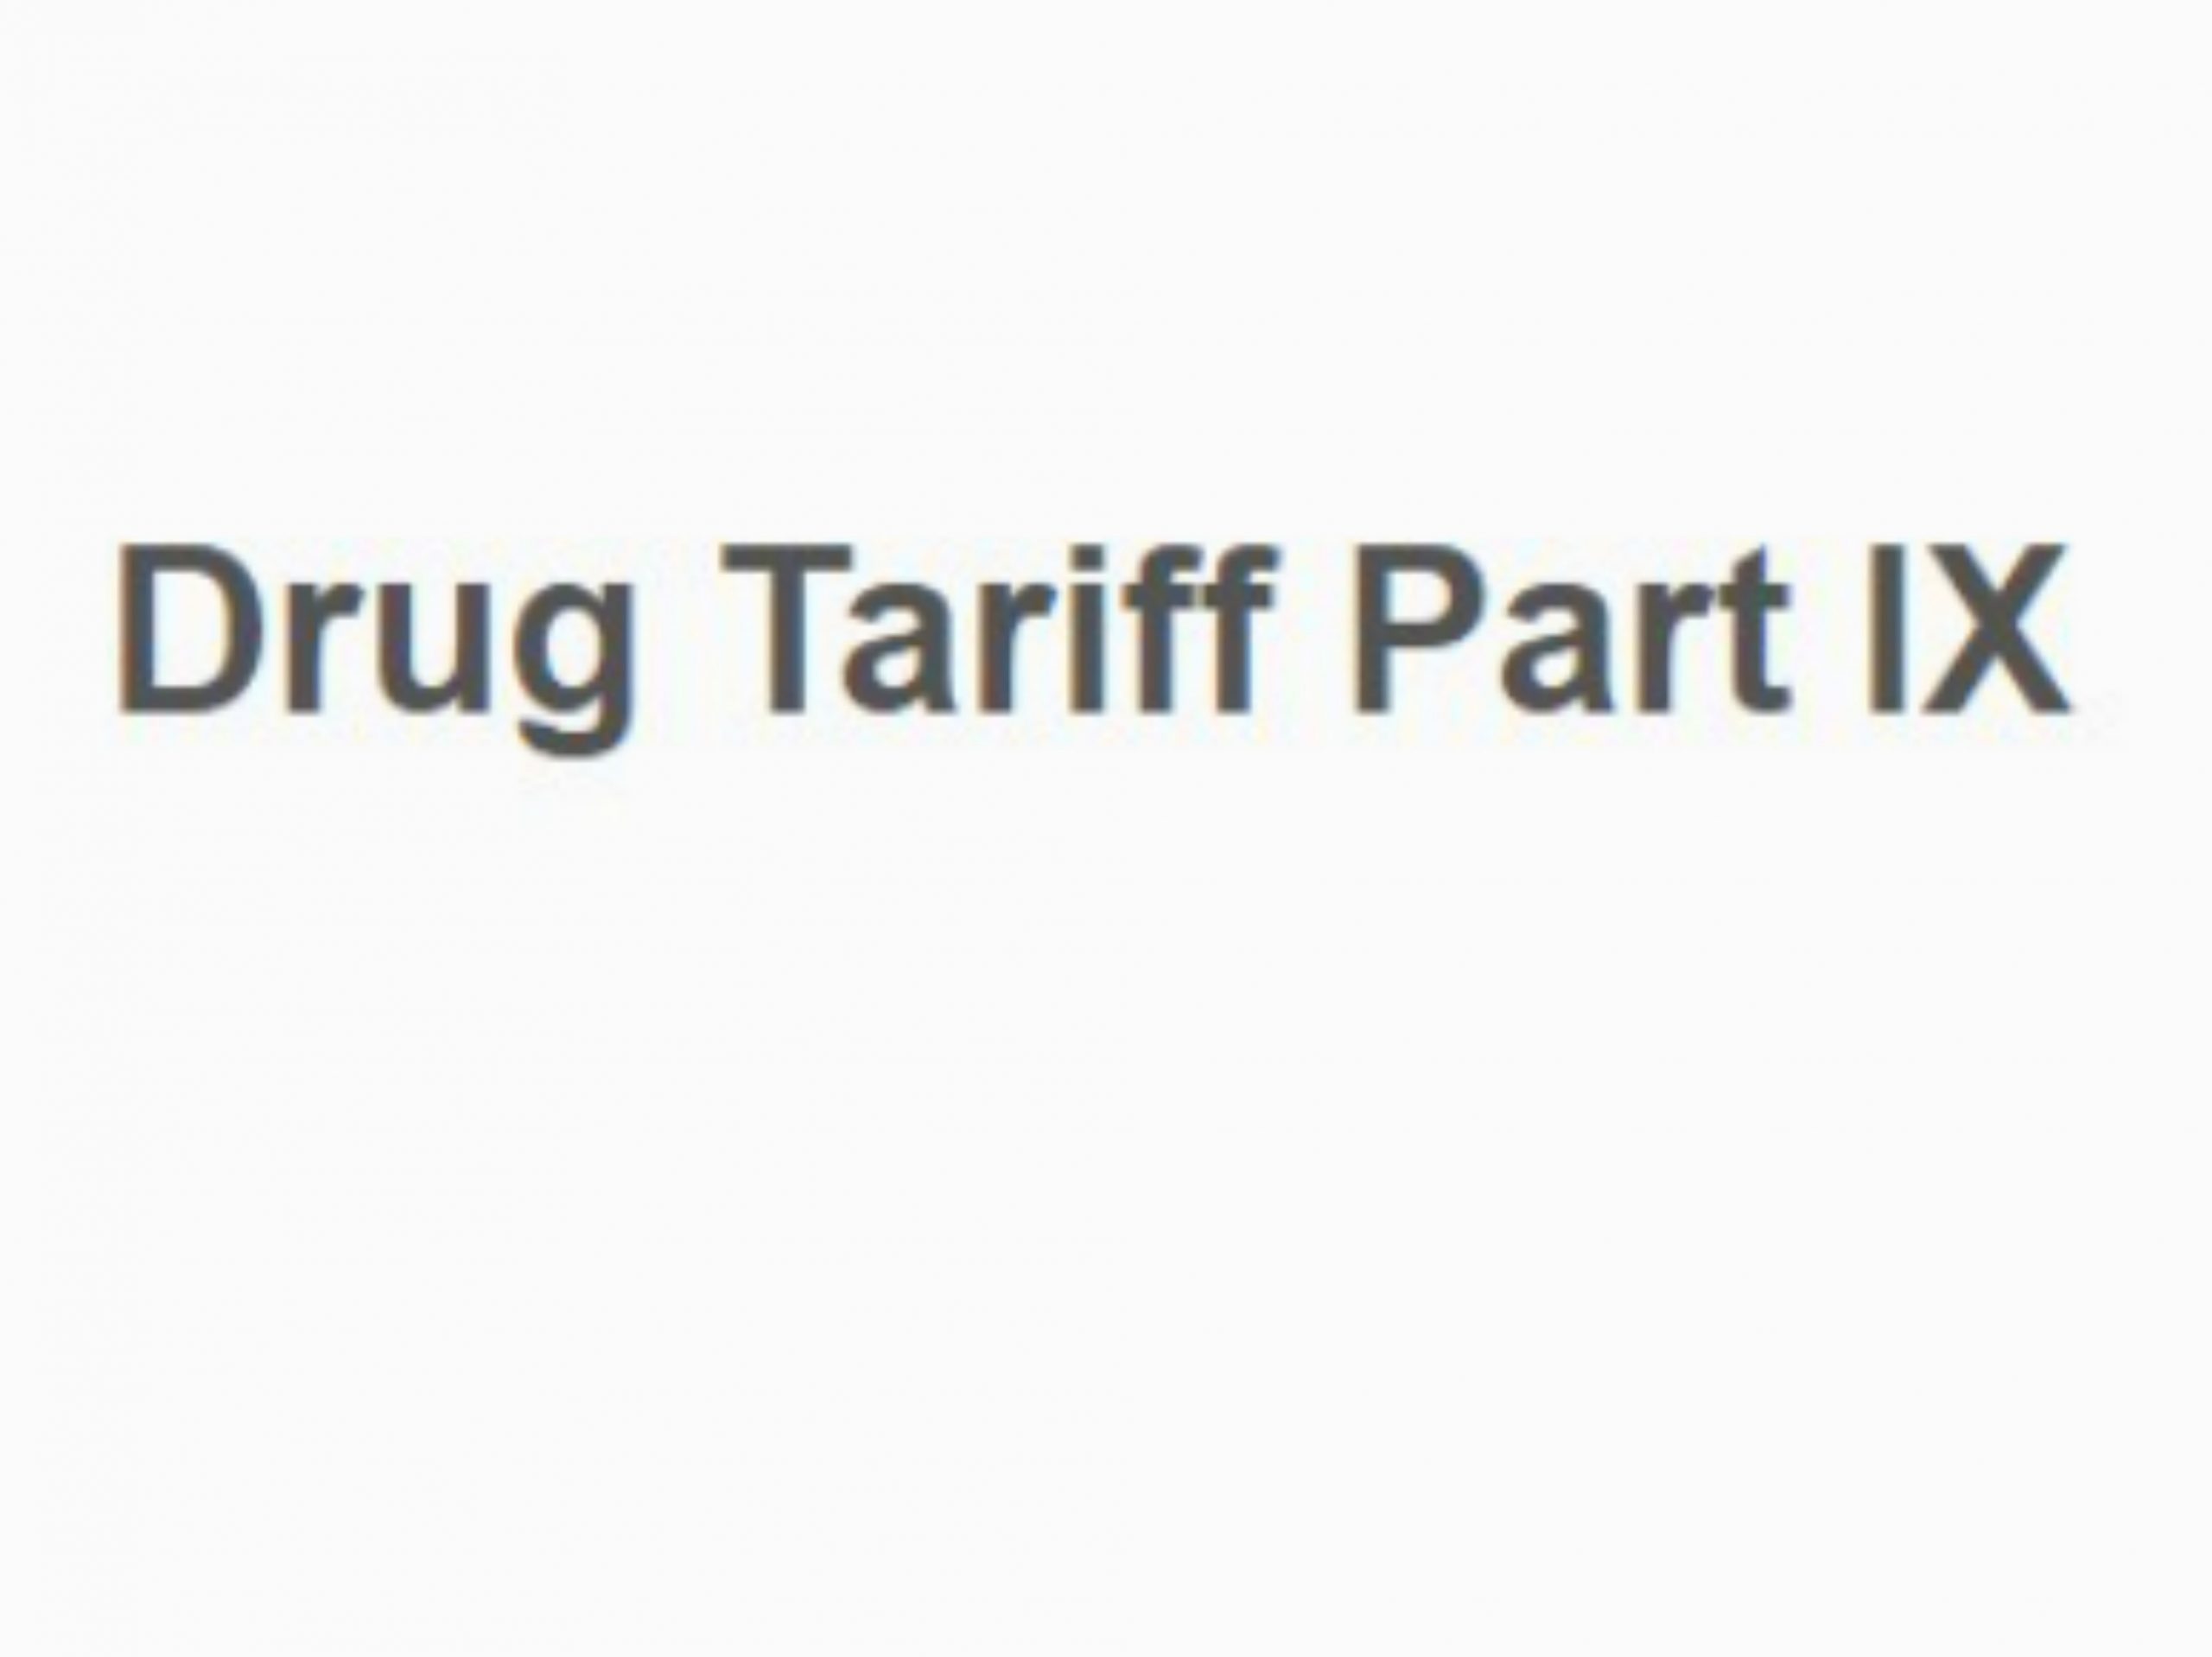 Part IX Industry Drug Tariff Committee Information